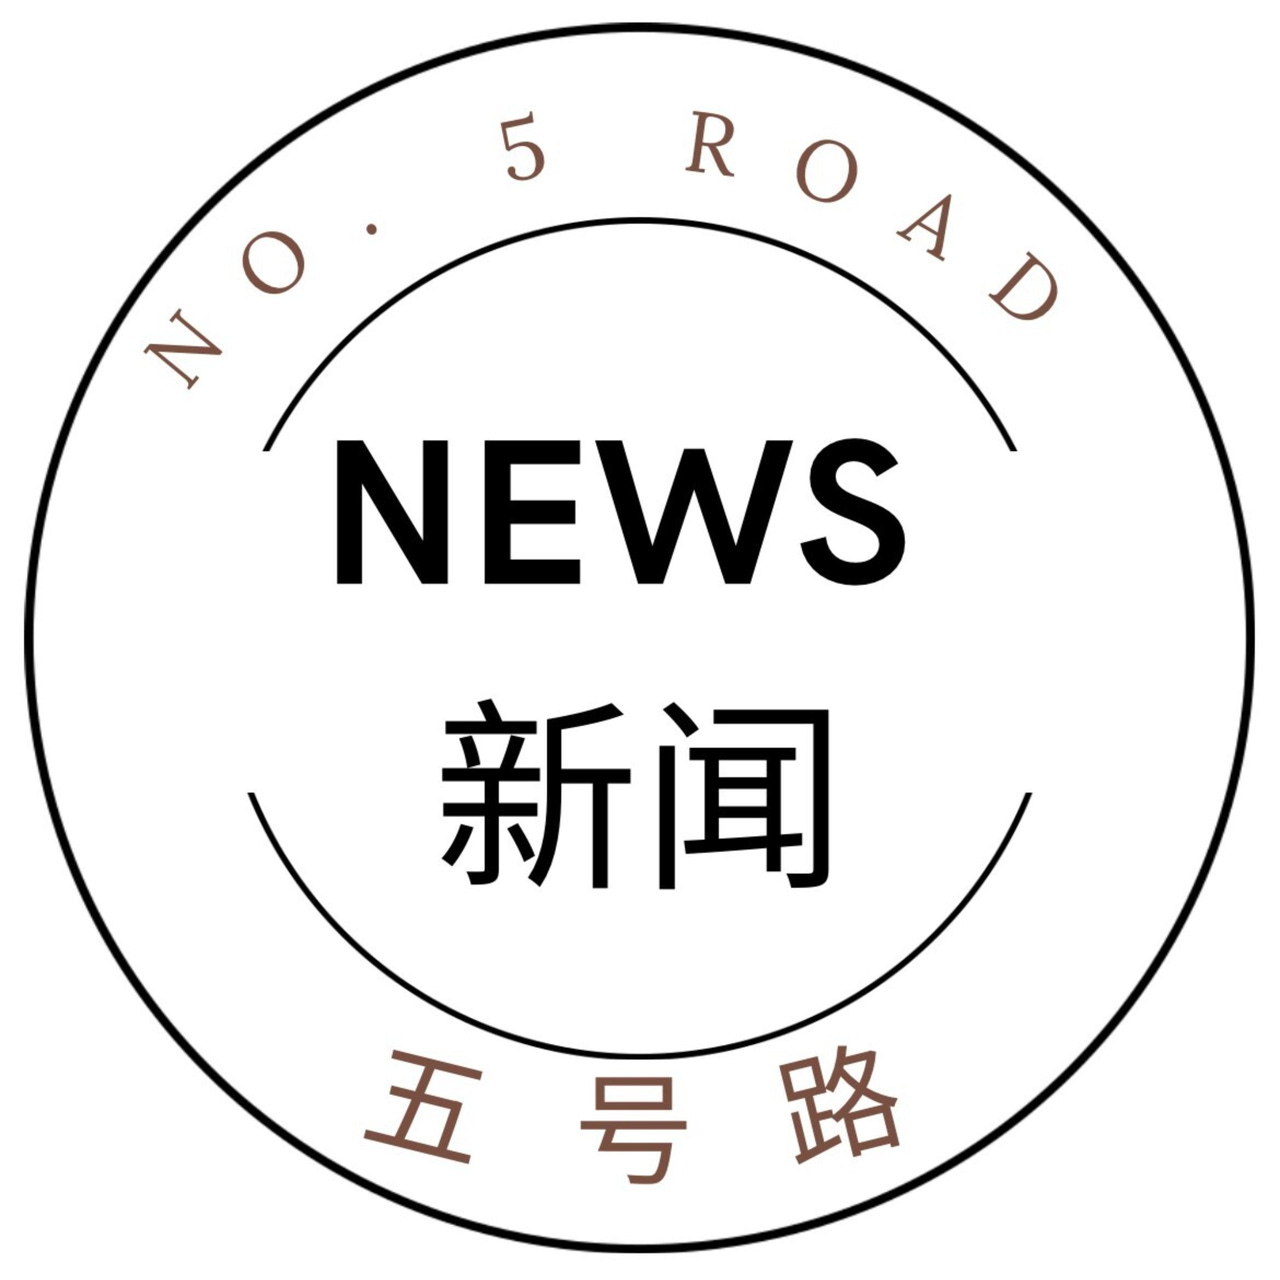 Artwork for 五号路新闻， No. 5 Road News